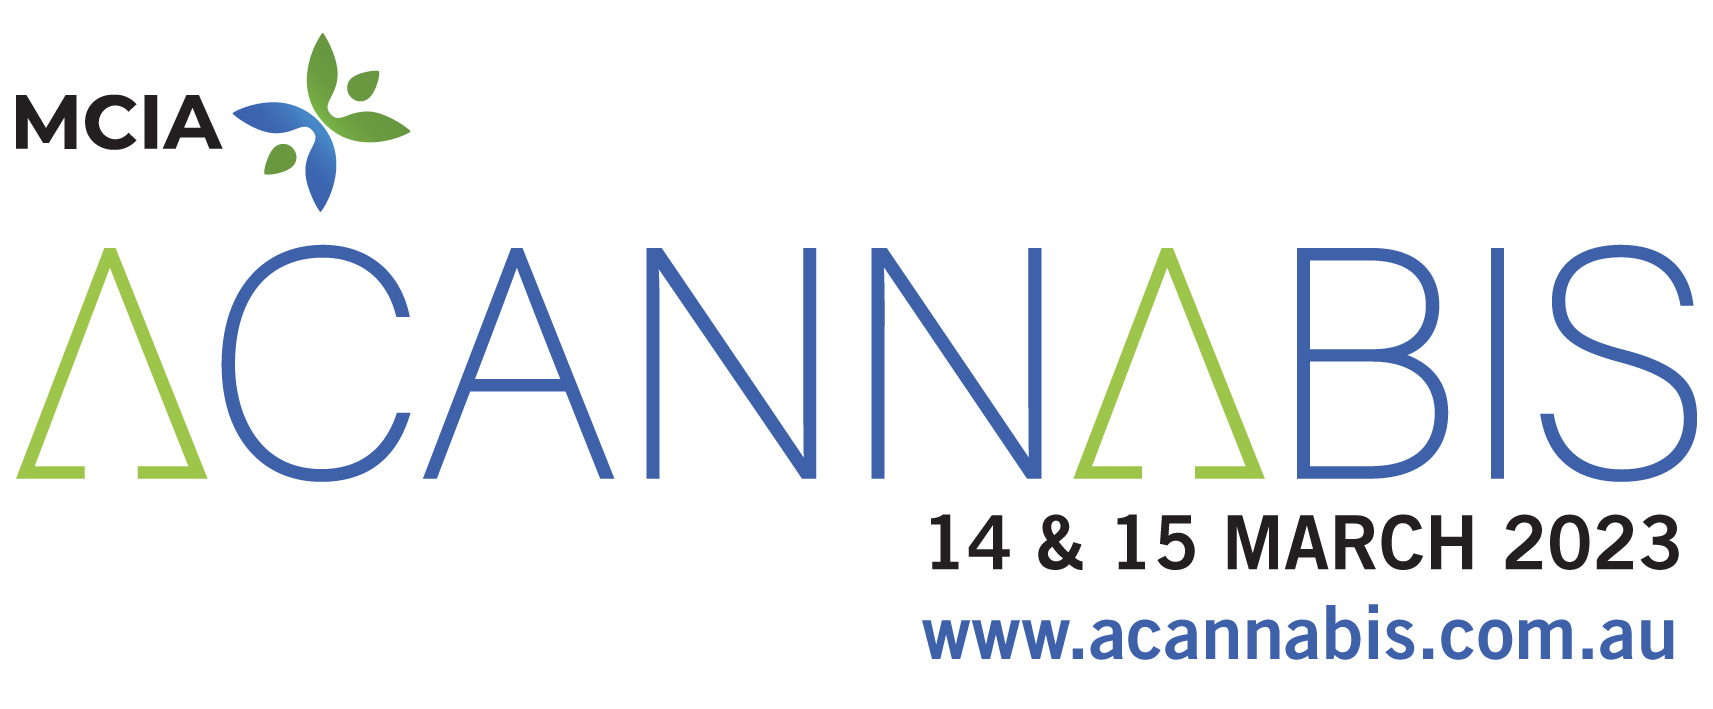 MCIA presents ACannabis 14-15 March 2023